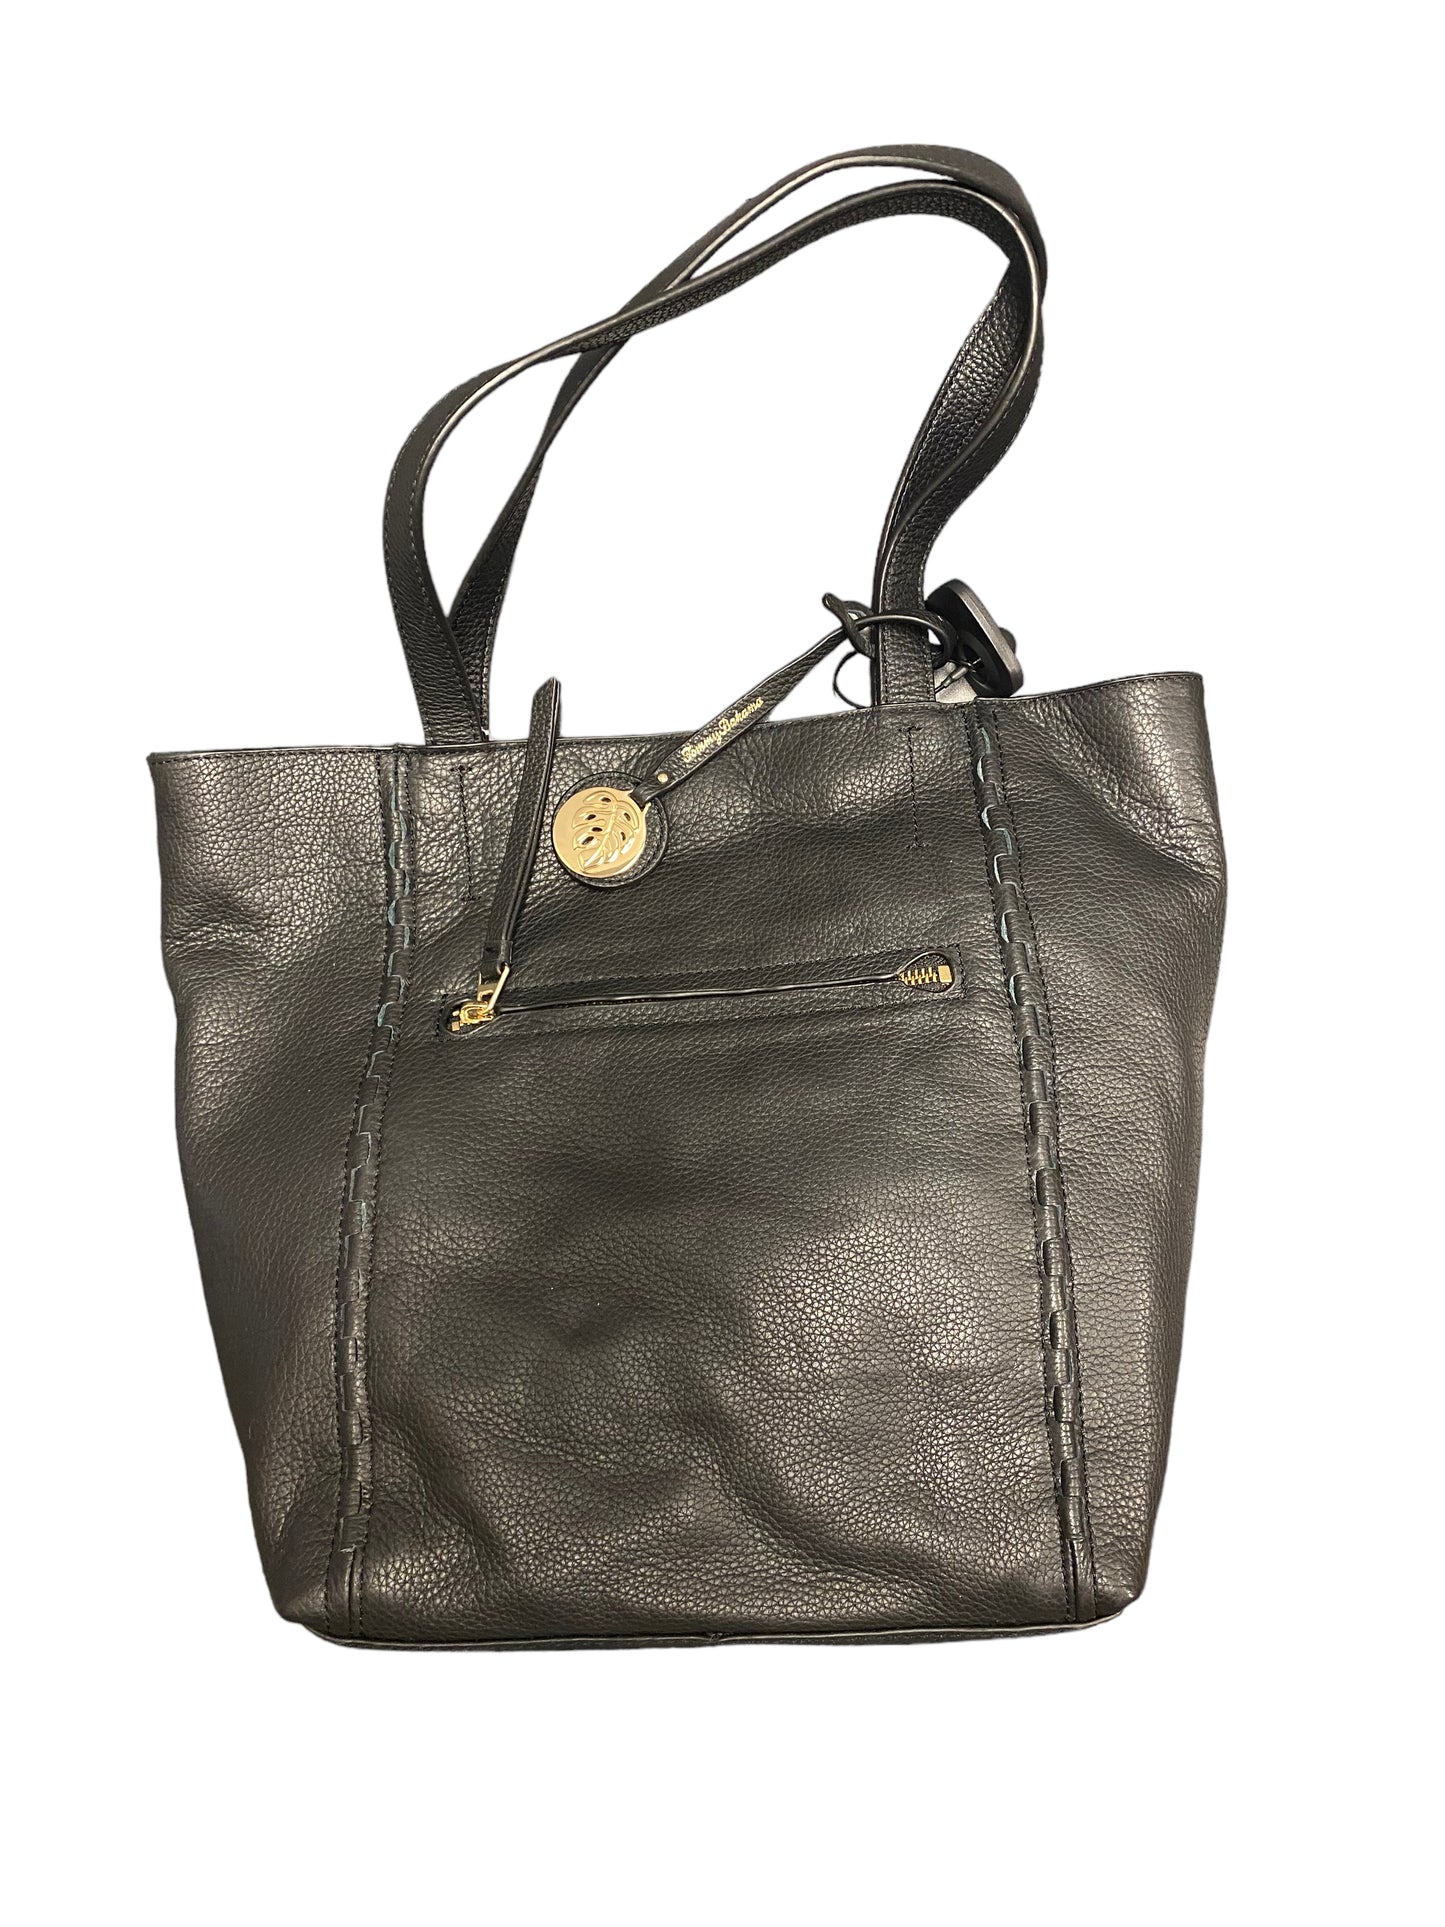 Handbag Leather By Tommy Bahama  Size: Medium